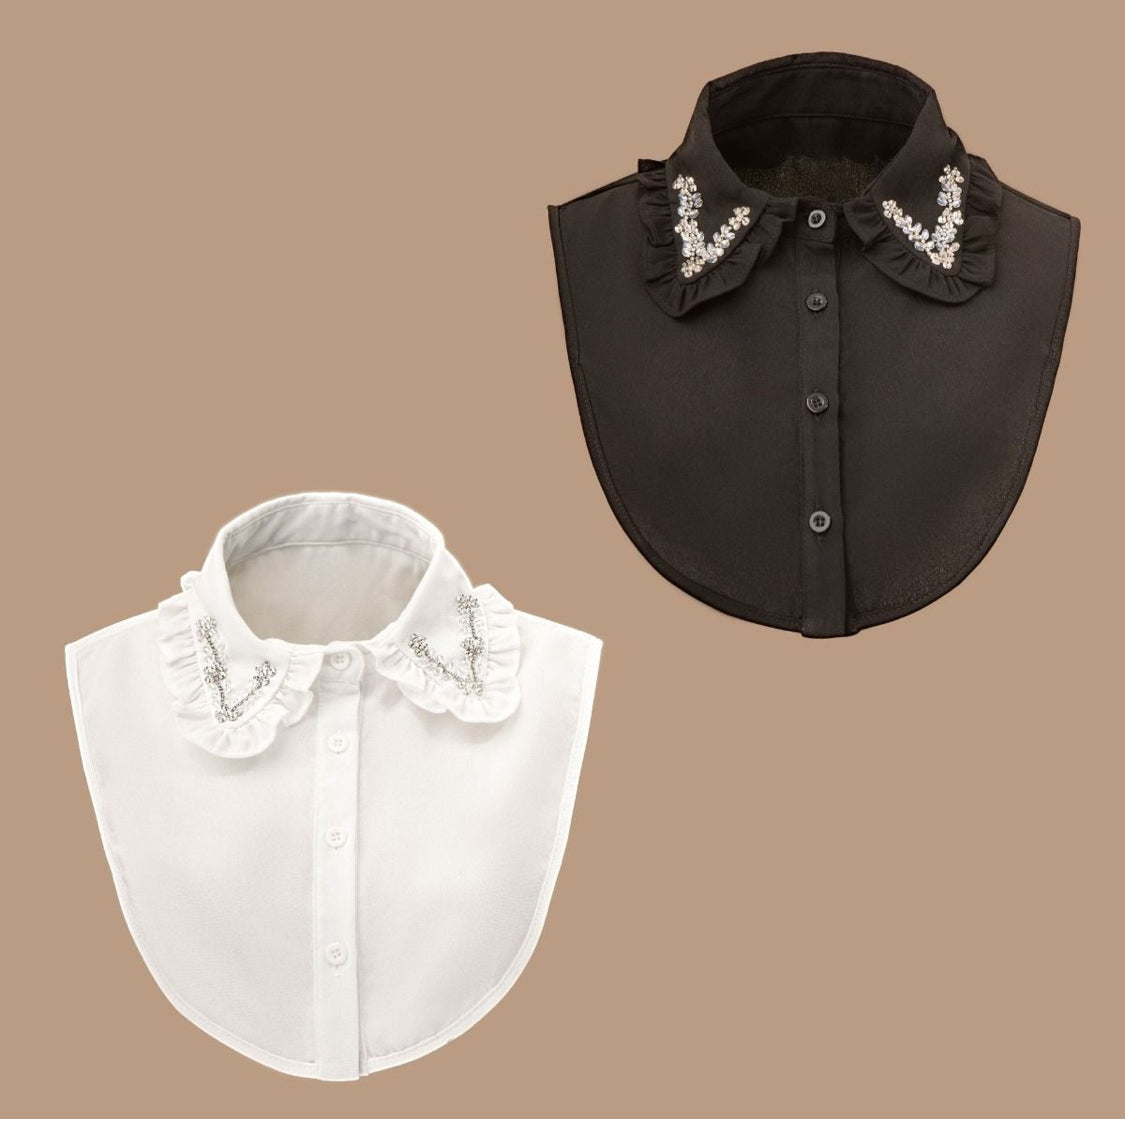 Detachable False Shirt Collars - Black with Daisy Crystals & Beads